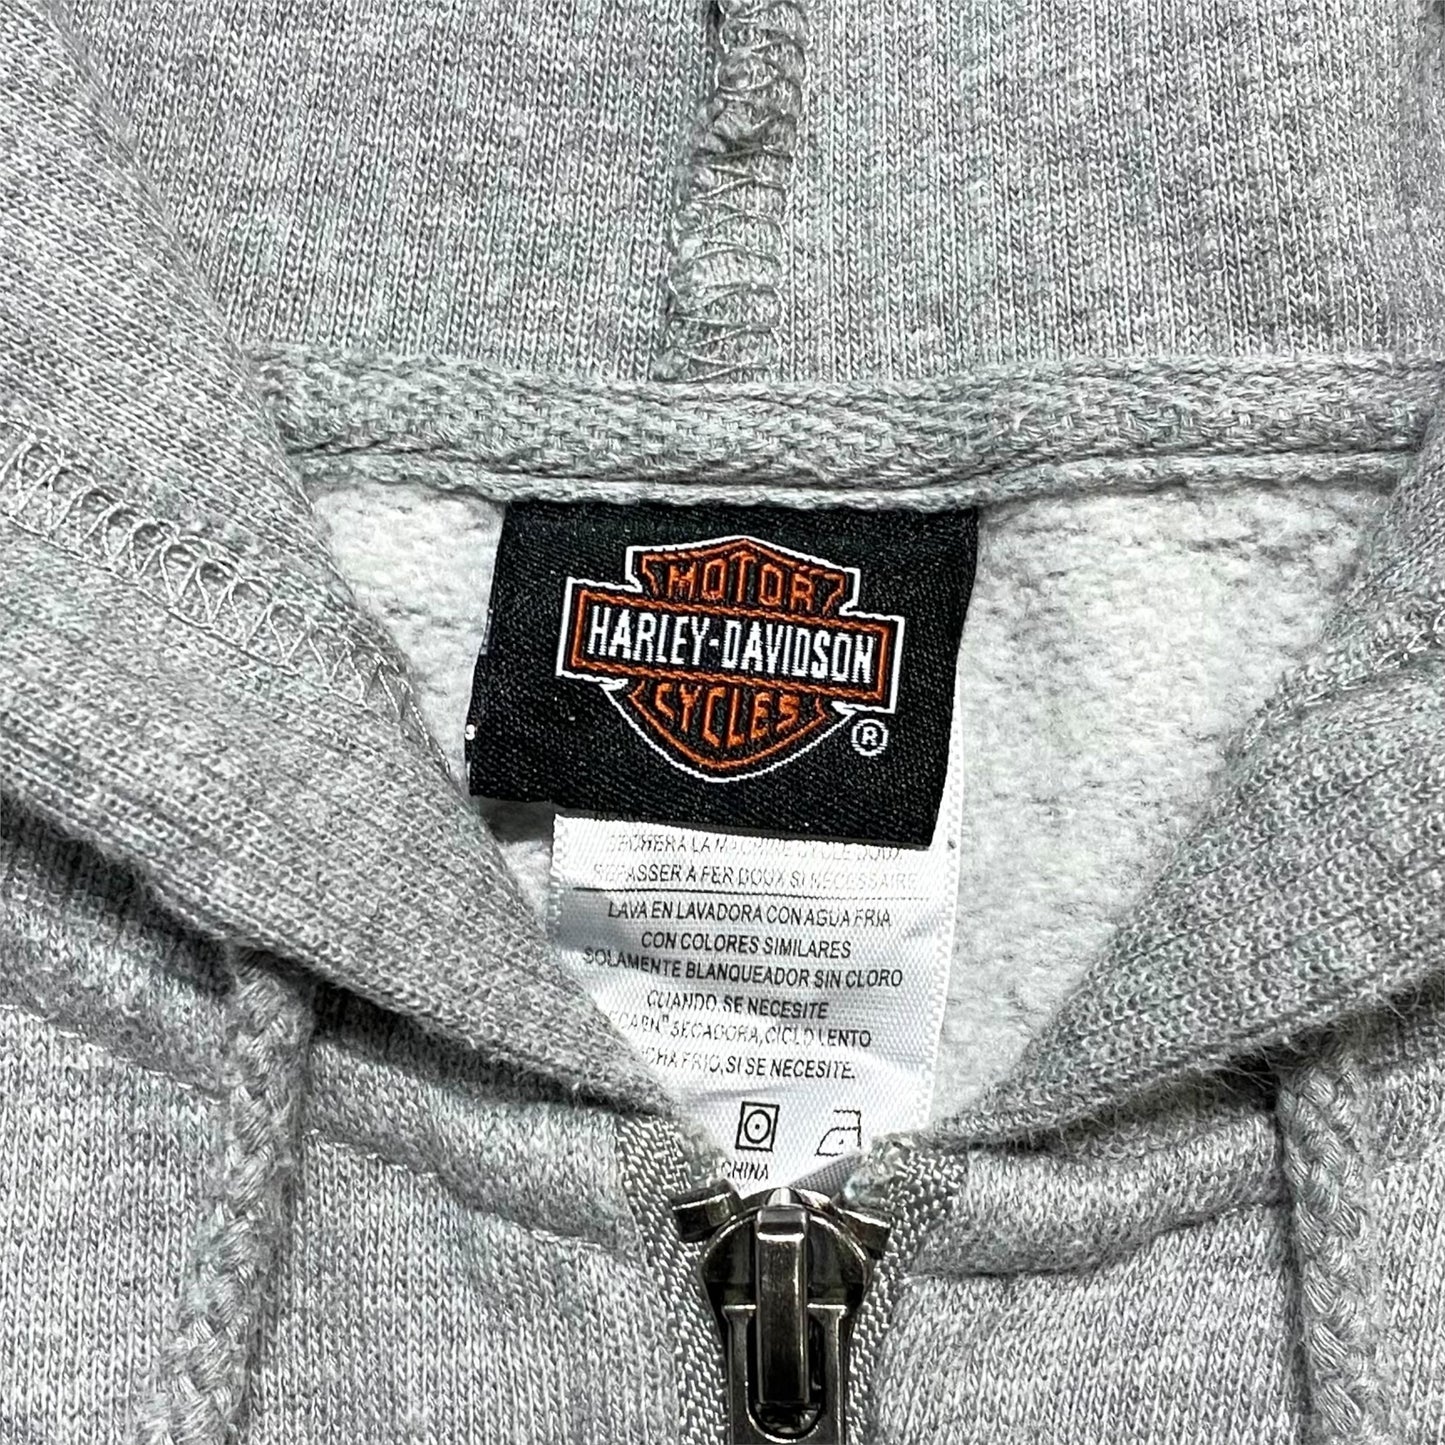 00's "Harley-Davidson" Wing design full zip hoodie